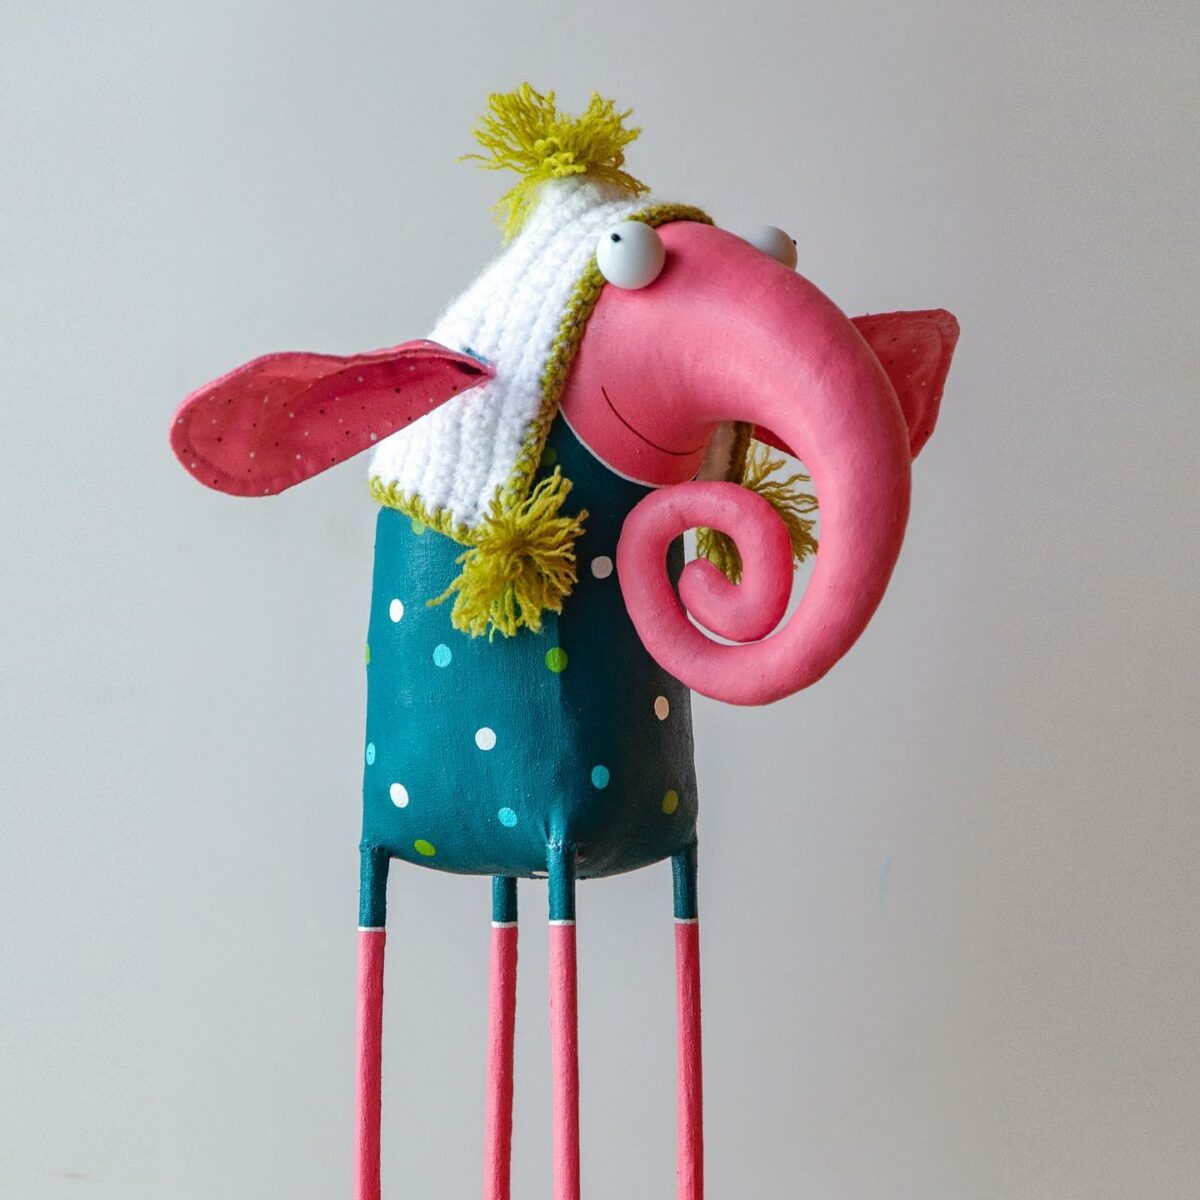 Colorful Handmade Toys Of Quirky Creatures By Lidiya Marinchuk (2)